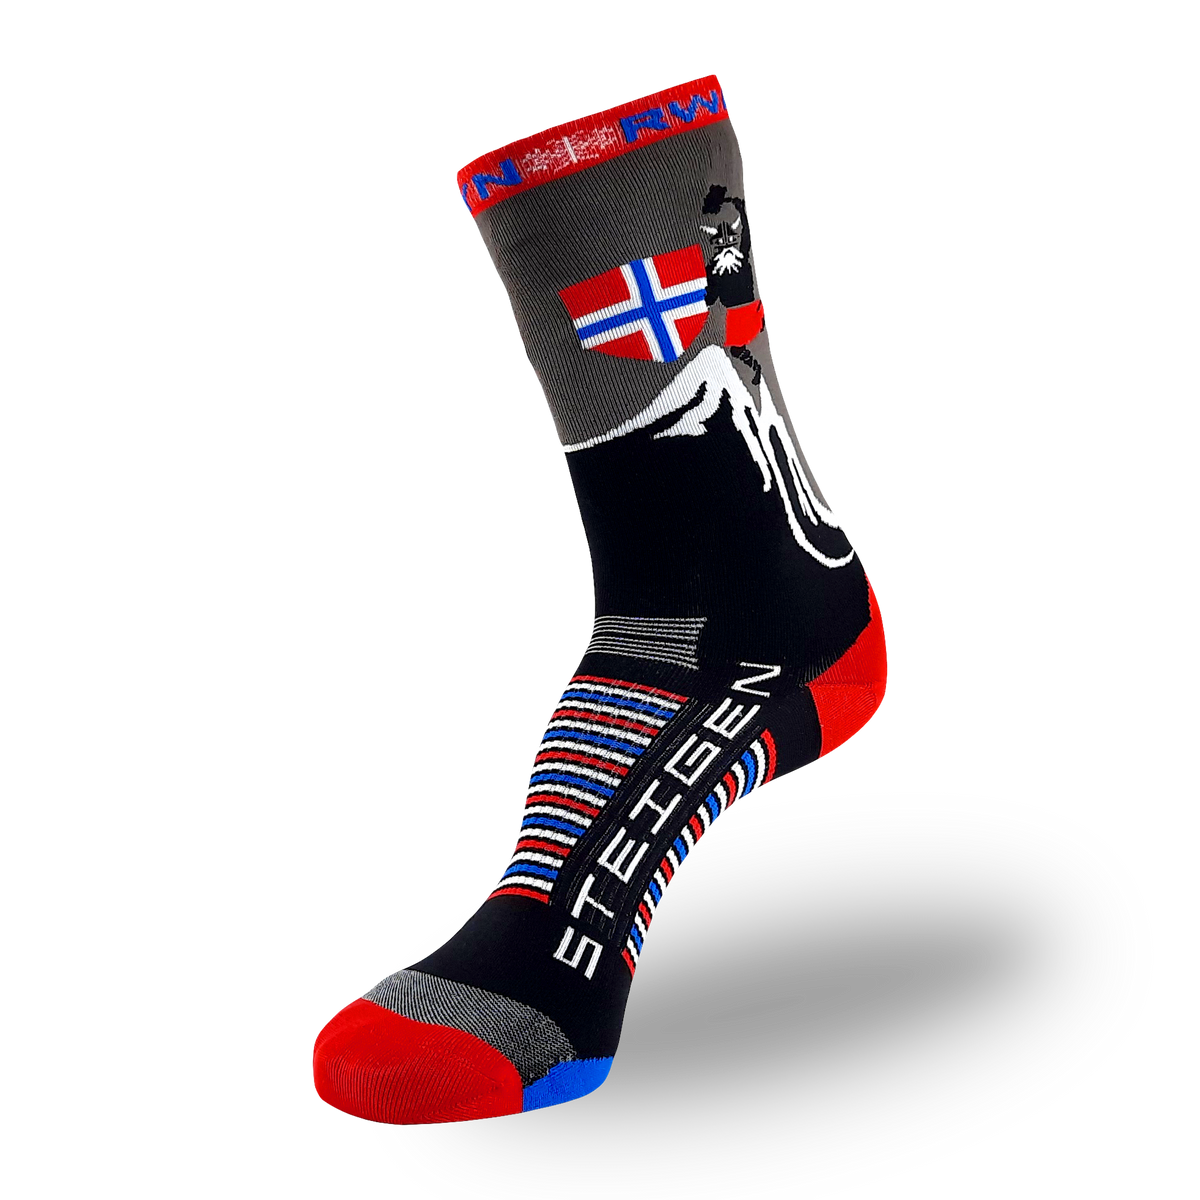 Steigen 3/4 Length Running Socks GEAR - Socks NORWAY